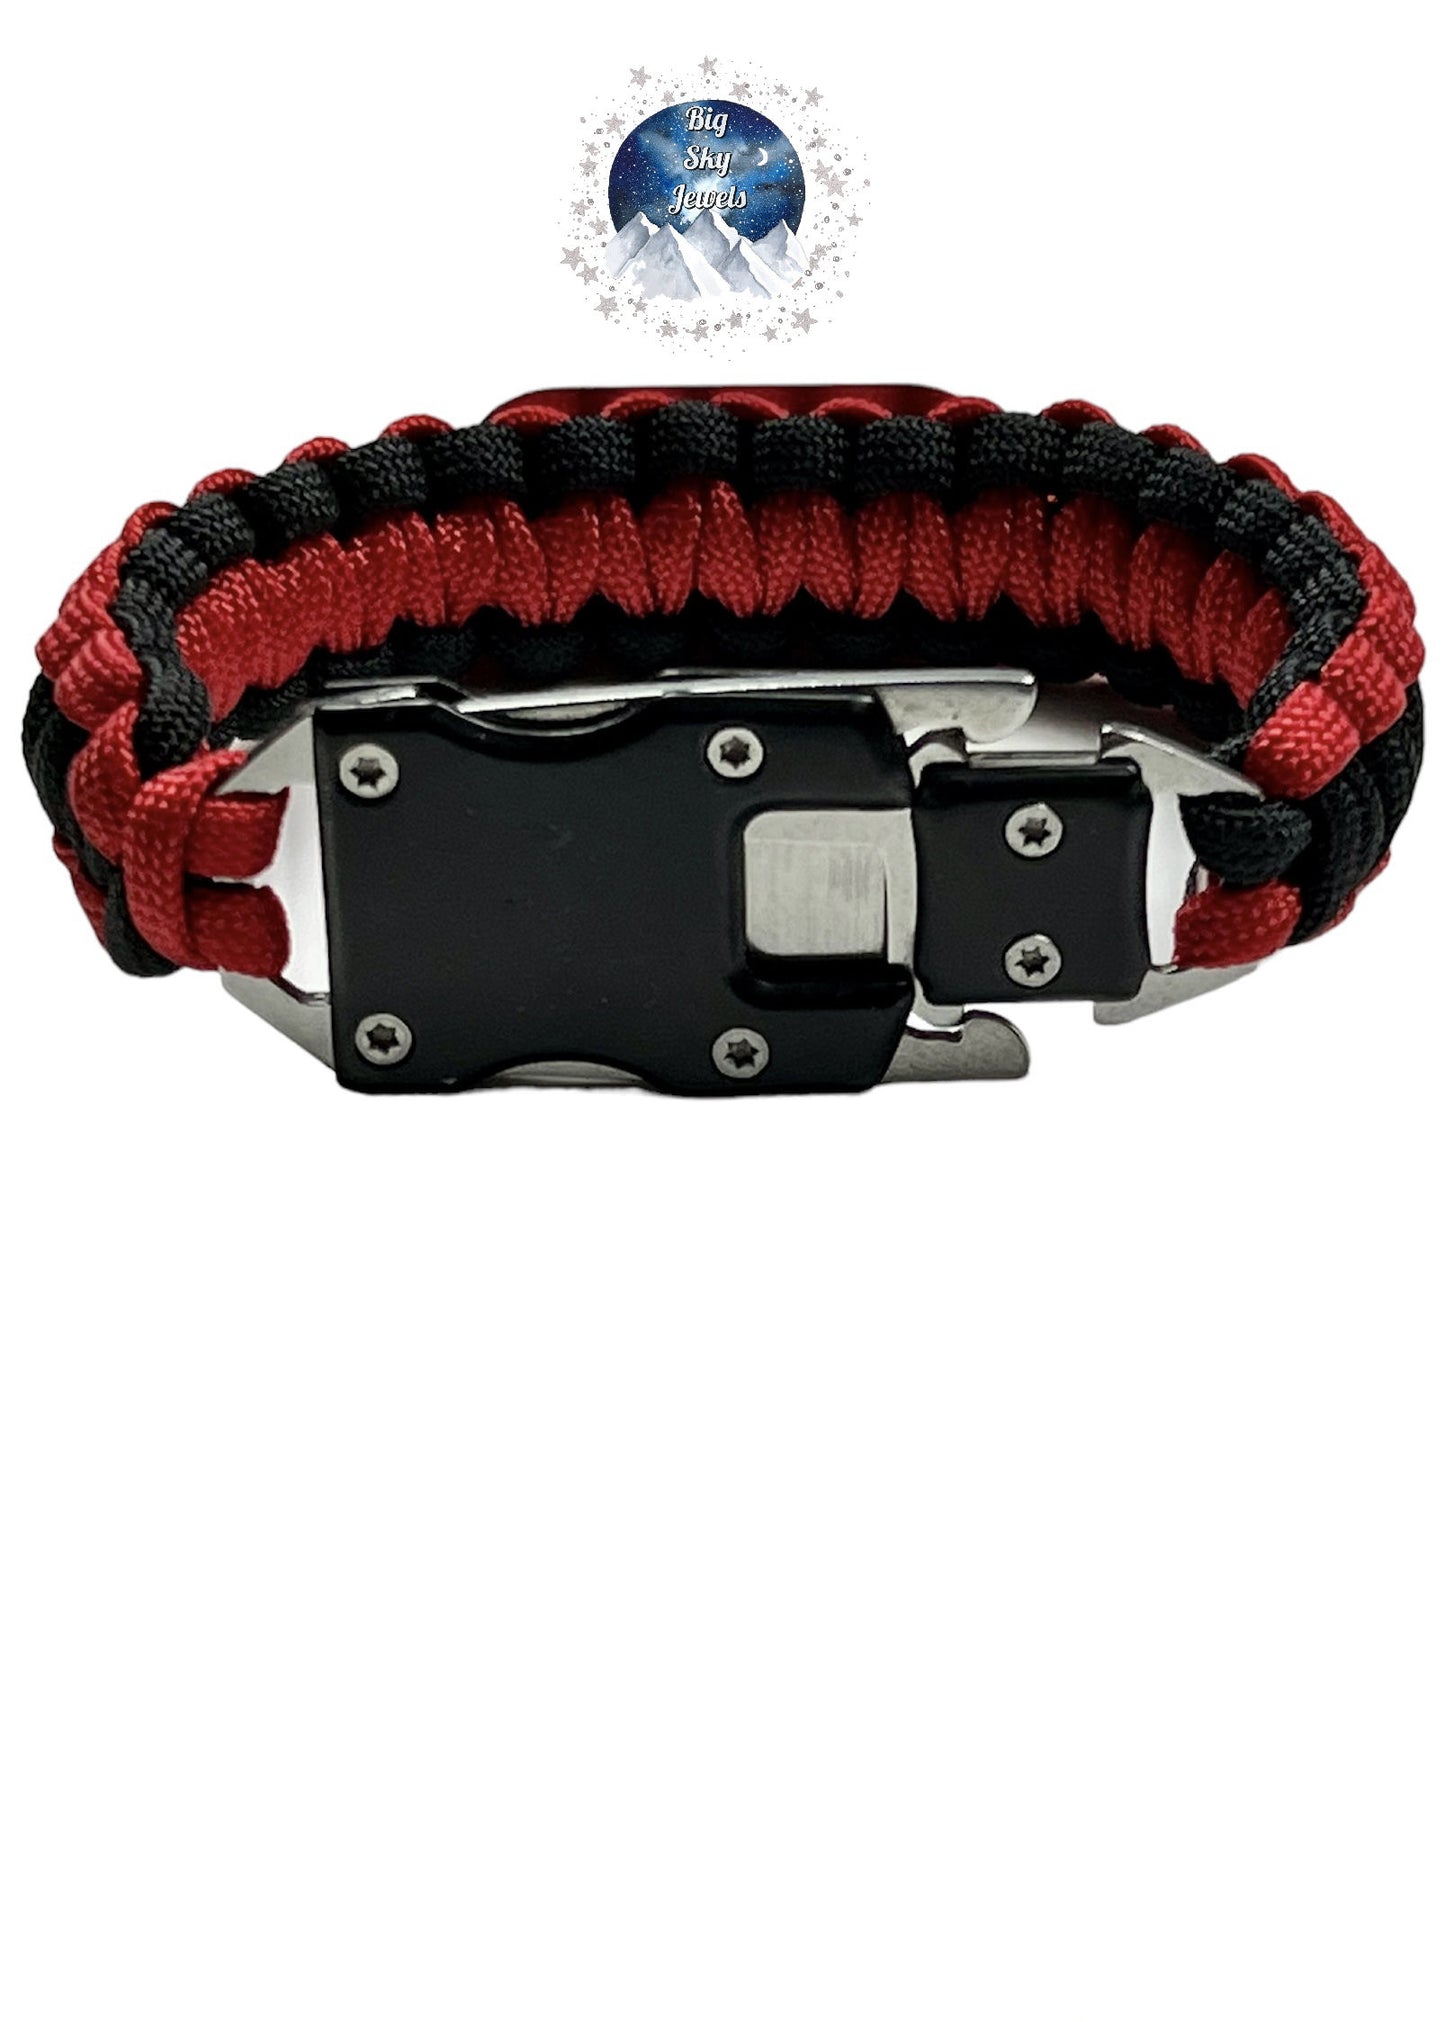 Custom Order For Size: ONE 550 Paracord Survival Bracelet w/ Knife Buckle.  Stainless Steel Black Color Buckle. Red & Black Color Paracord Ages 18+, Adults only